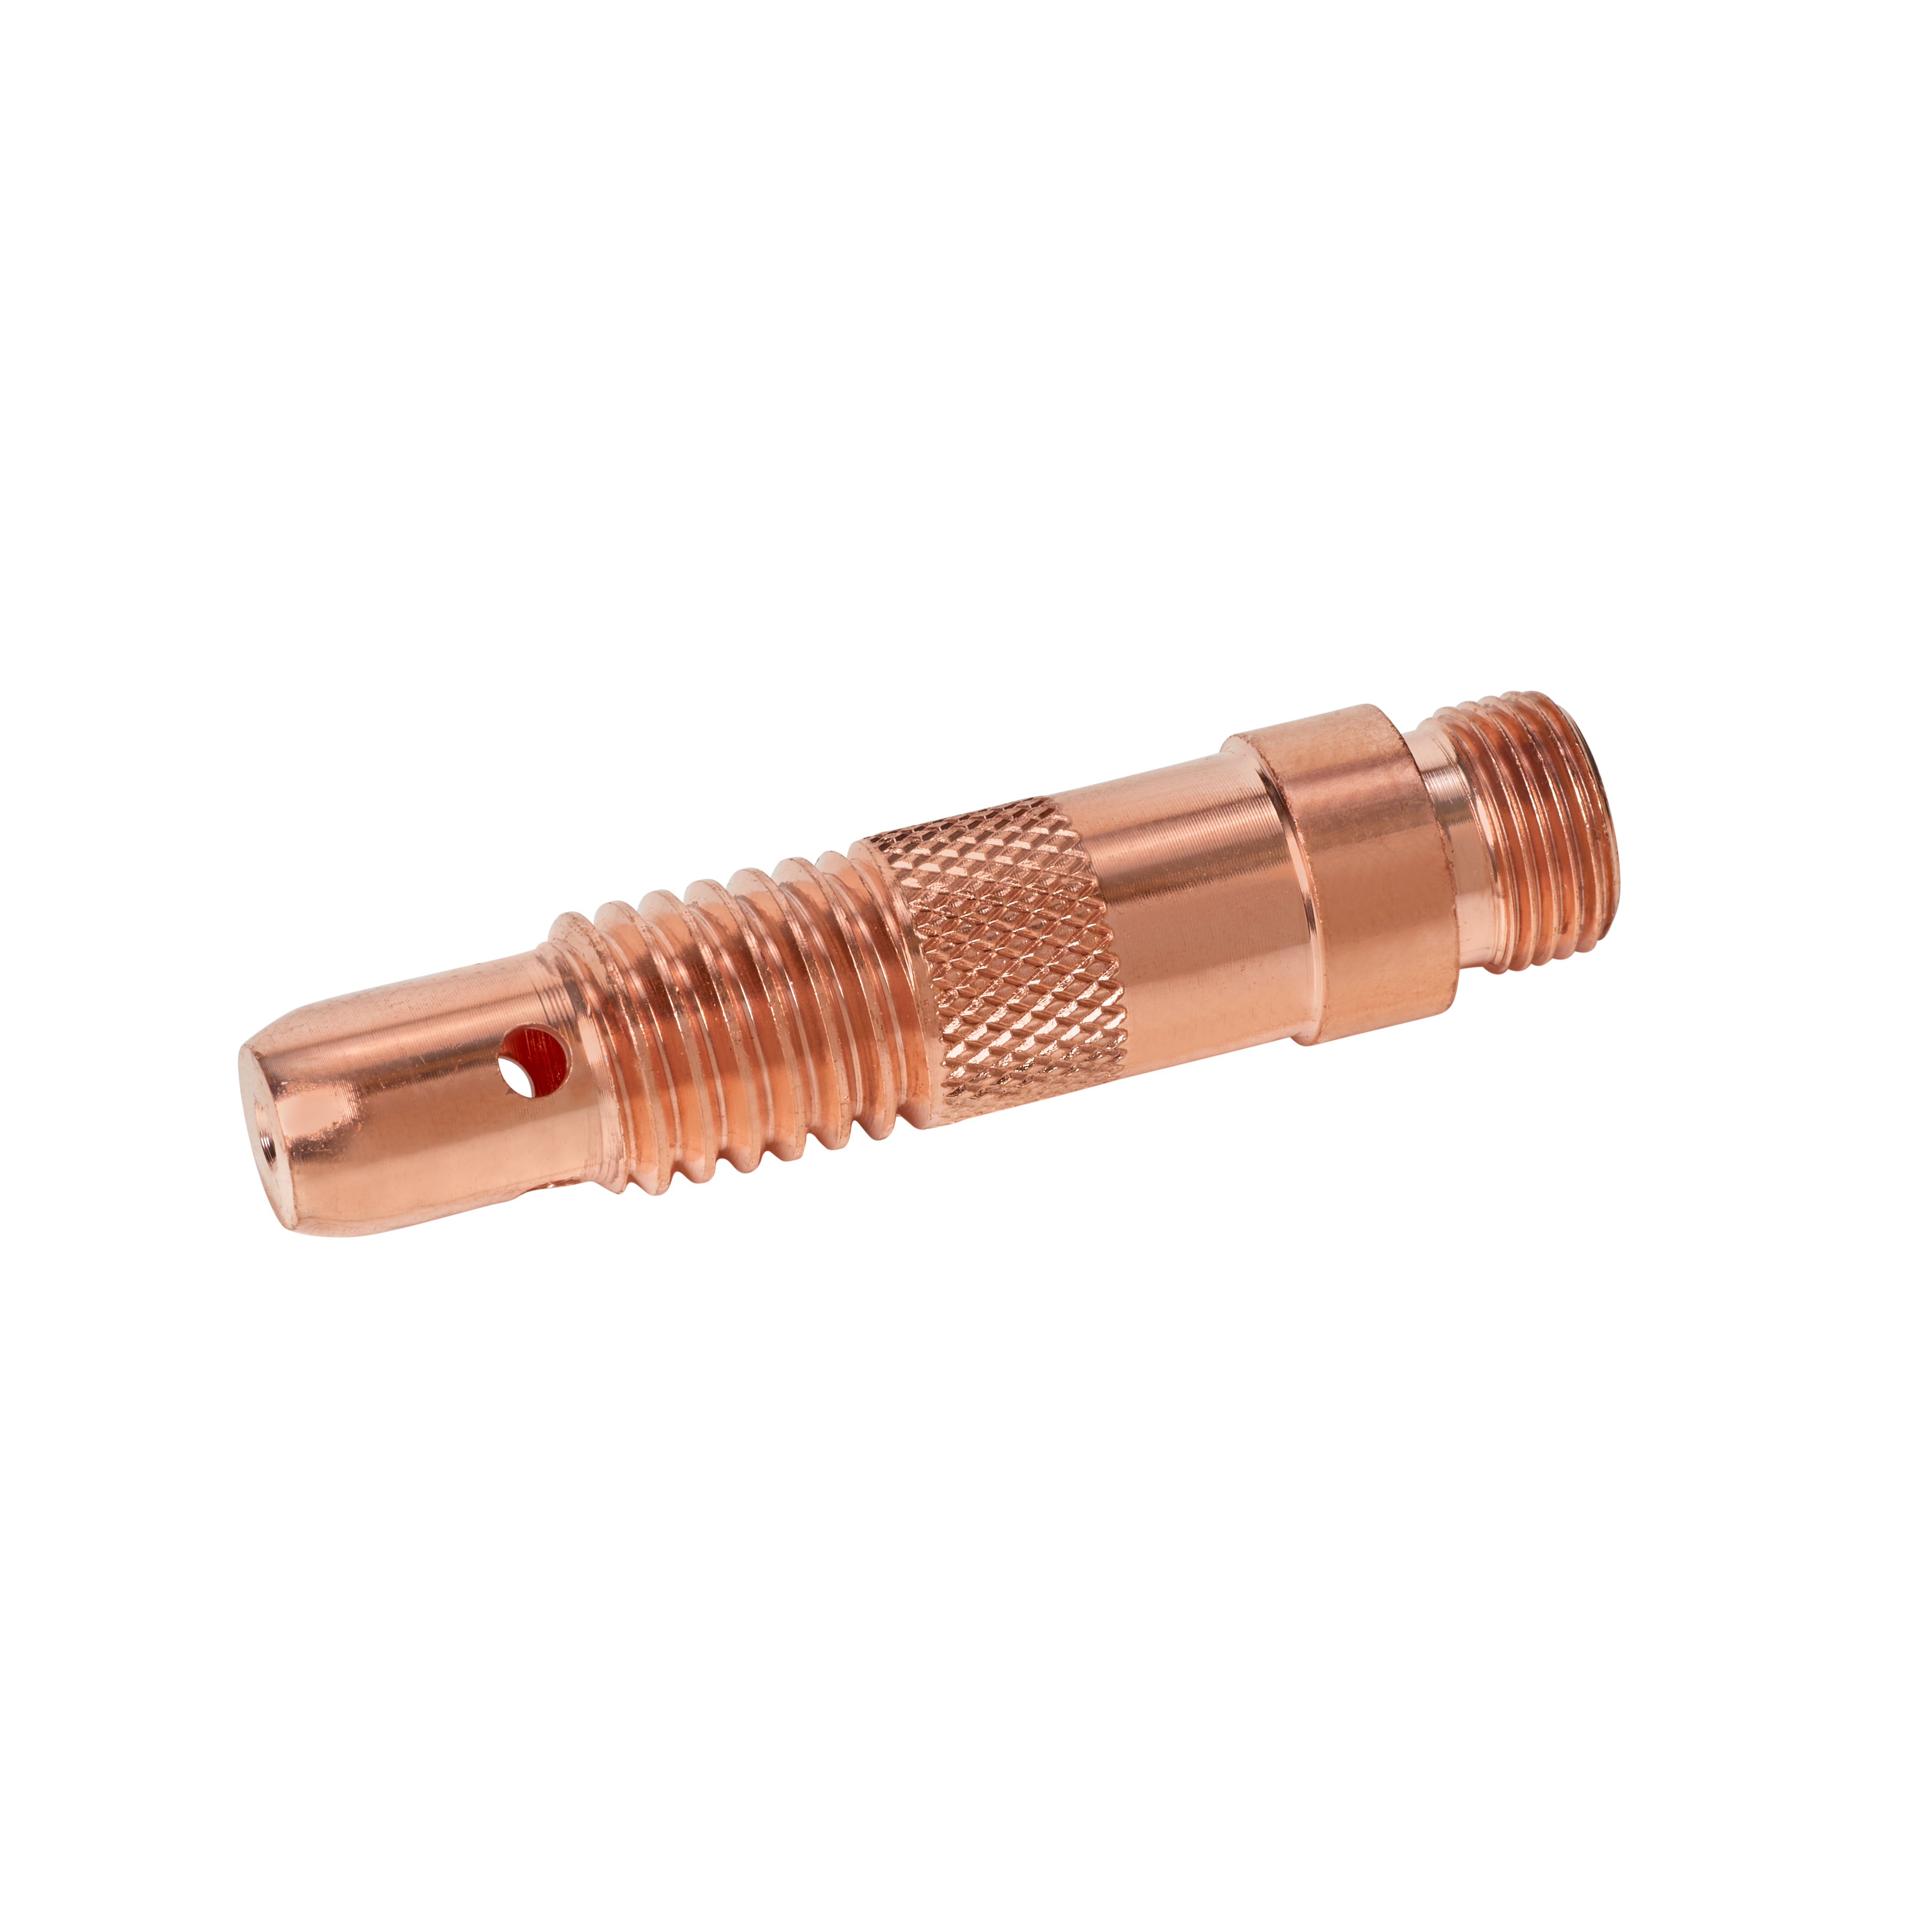 Weldmark by CK Worldwide 10N30 Copper Collet Body 1/25 (0.040) Max Electrode Diameter